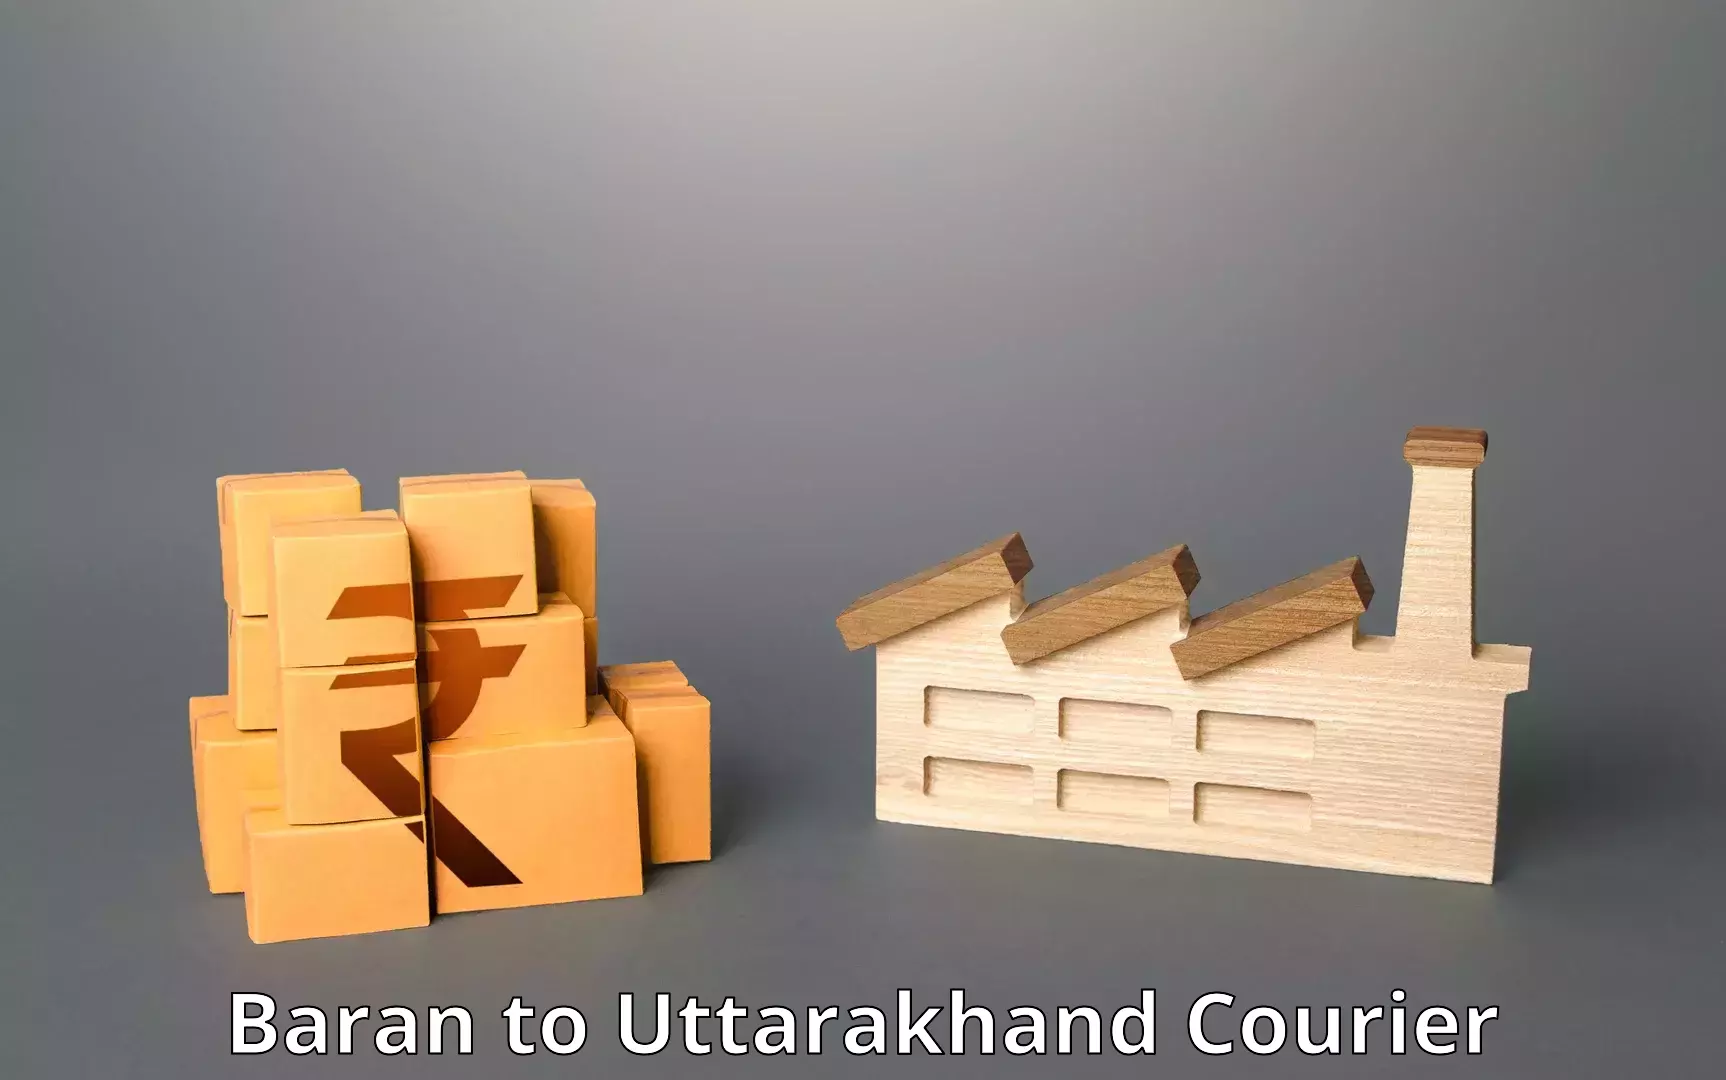 Courier service innovation Baran to Uttarakhand